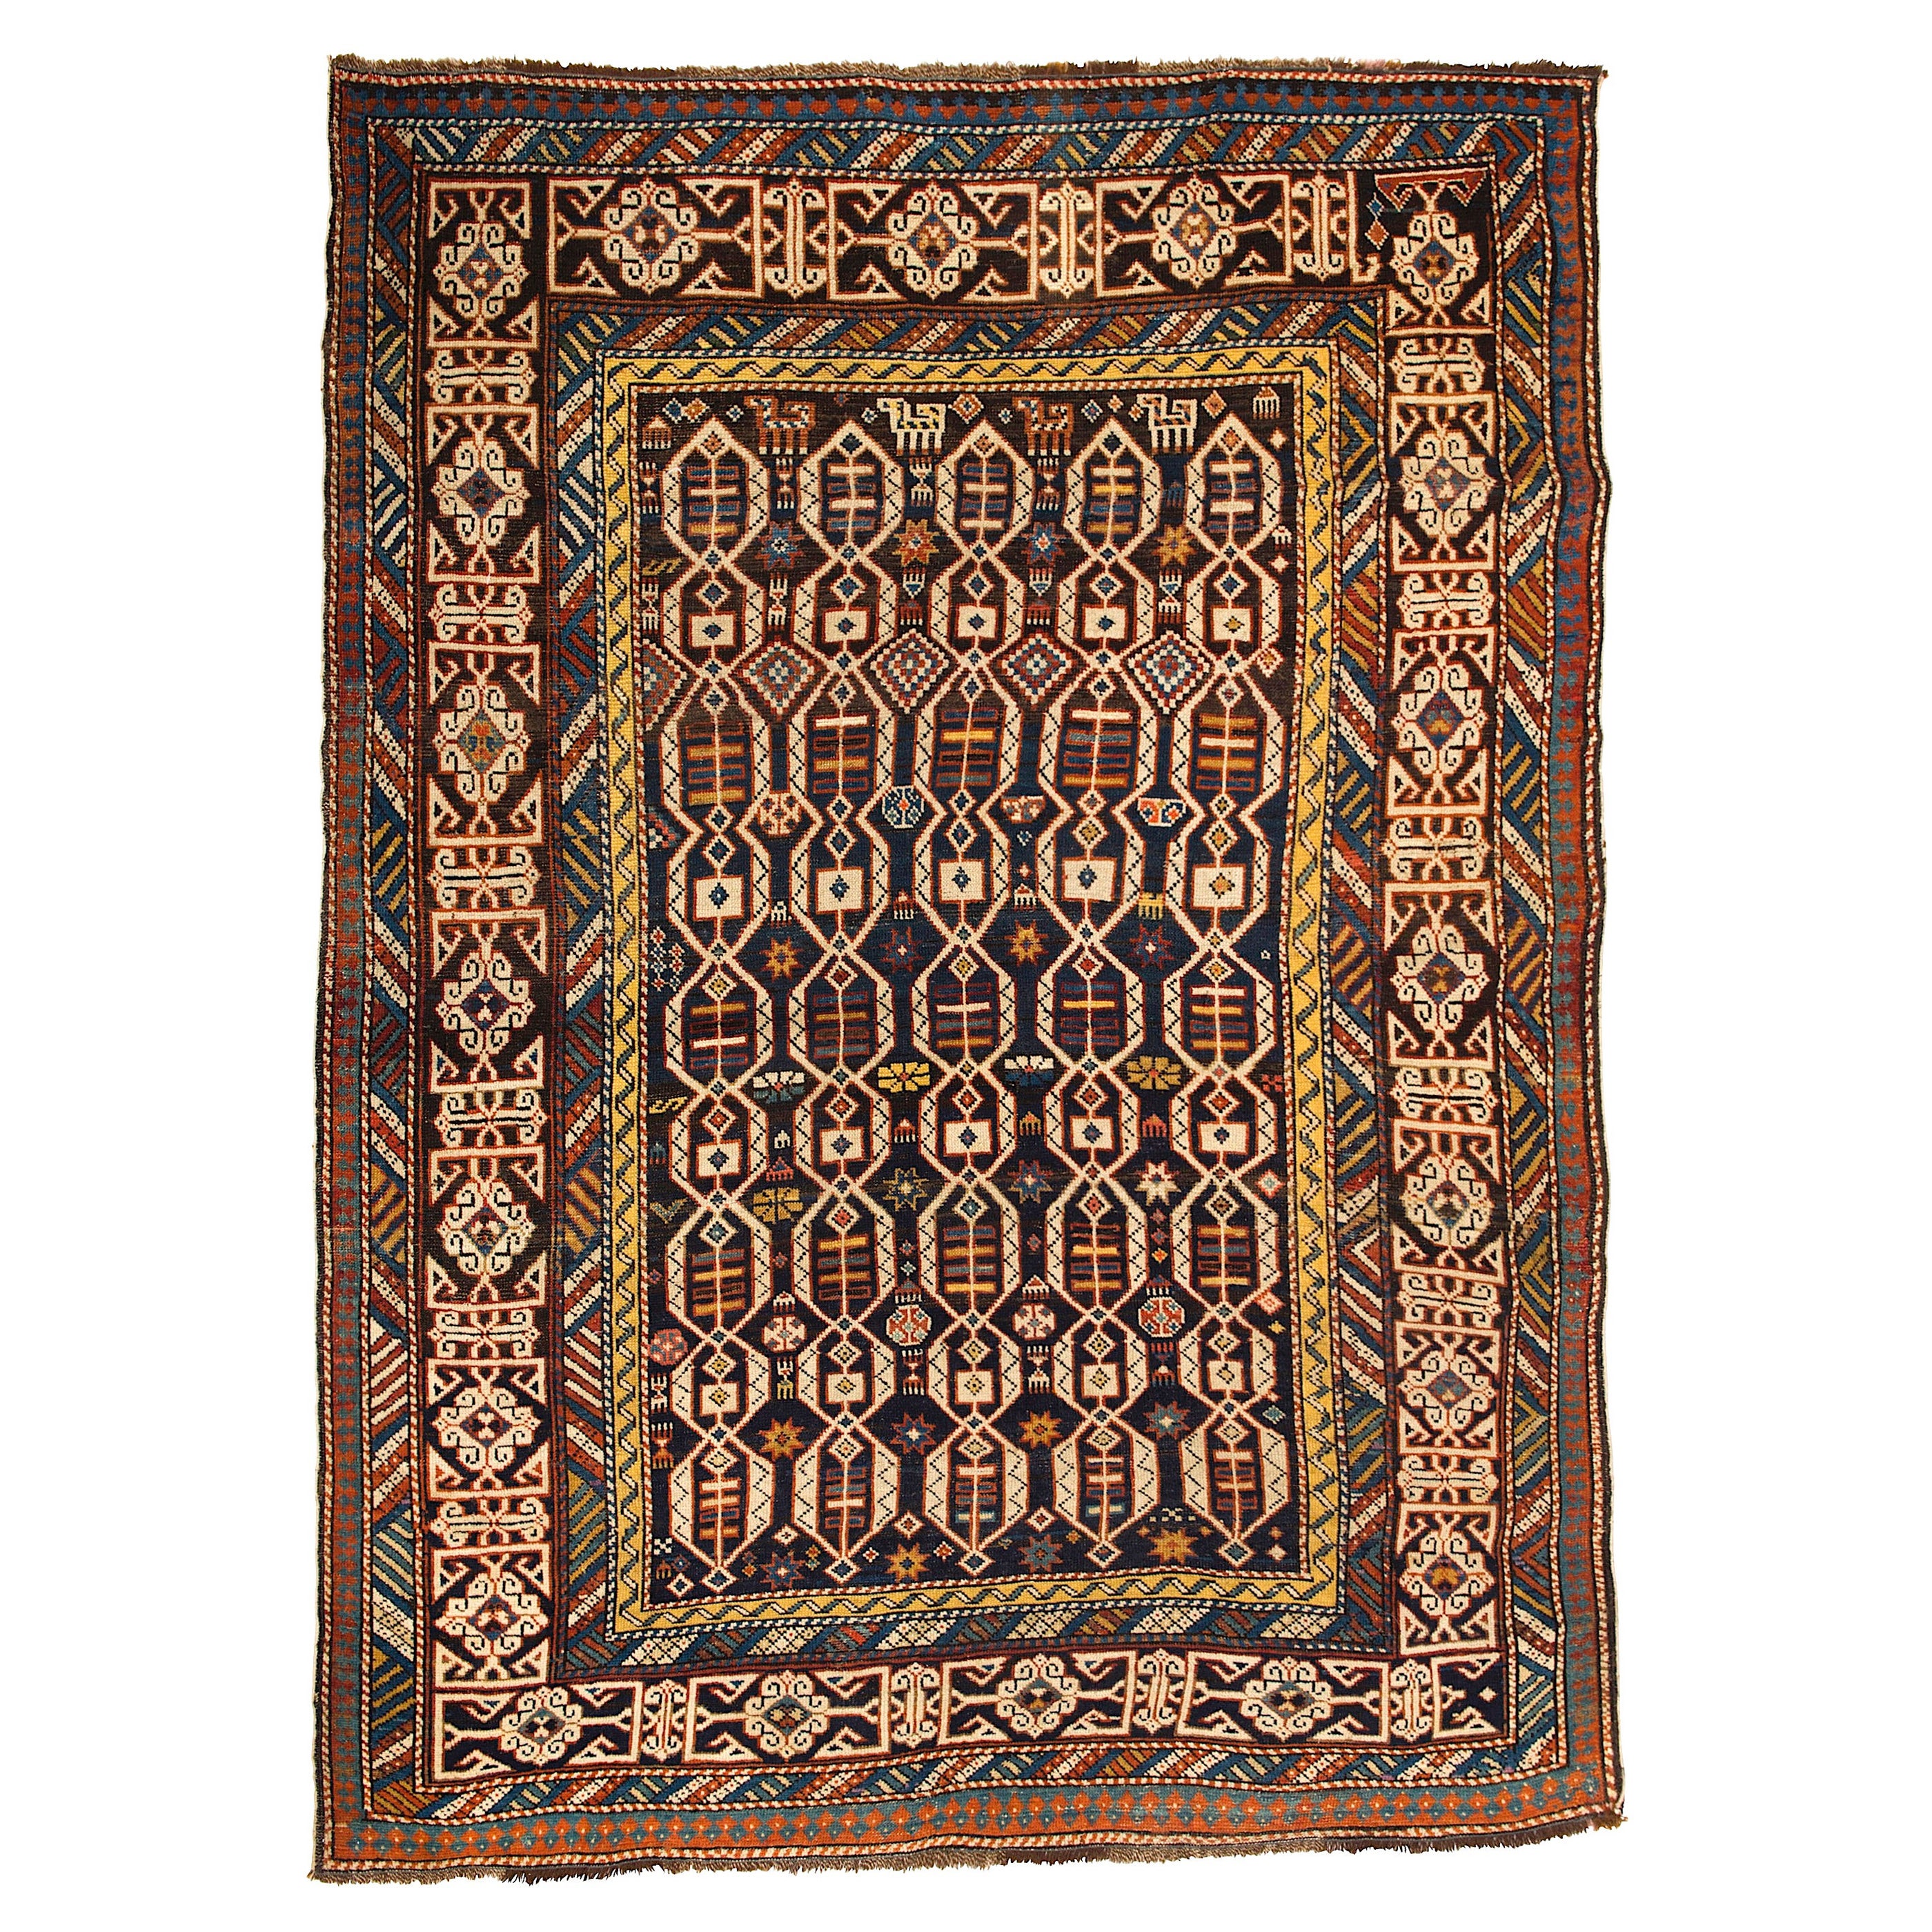 Rare tapis caucasien ancien Kuba Shirvan de 4x5,4 pieds, vers 1880 en vente